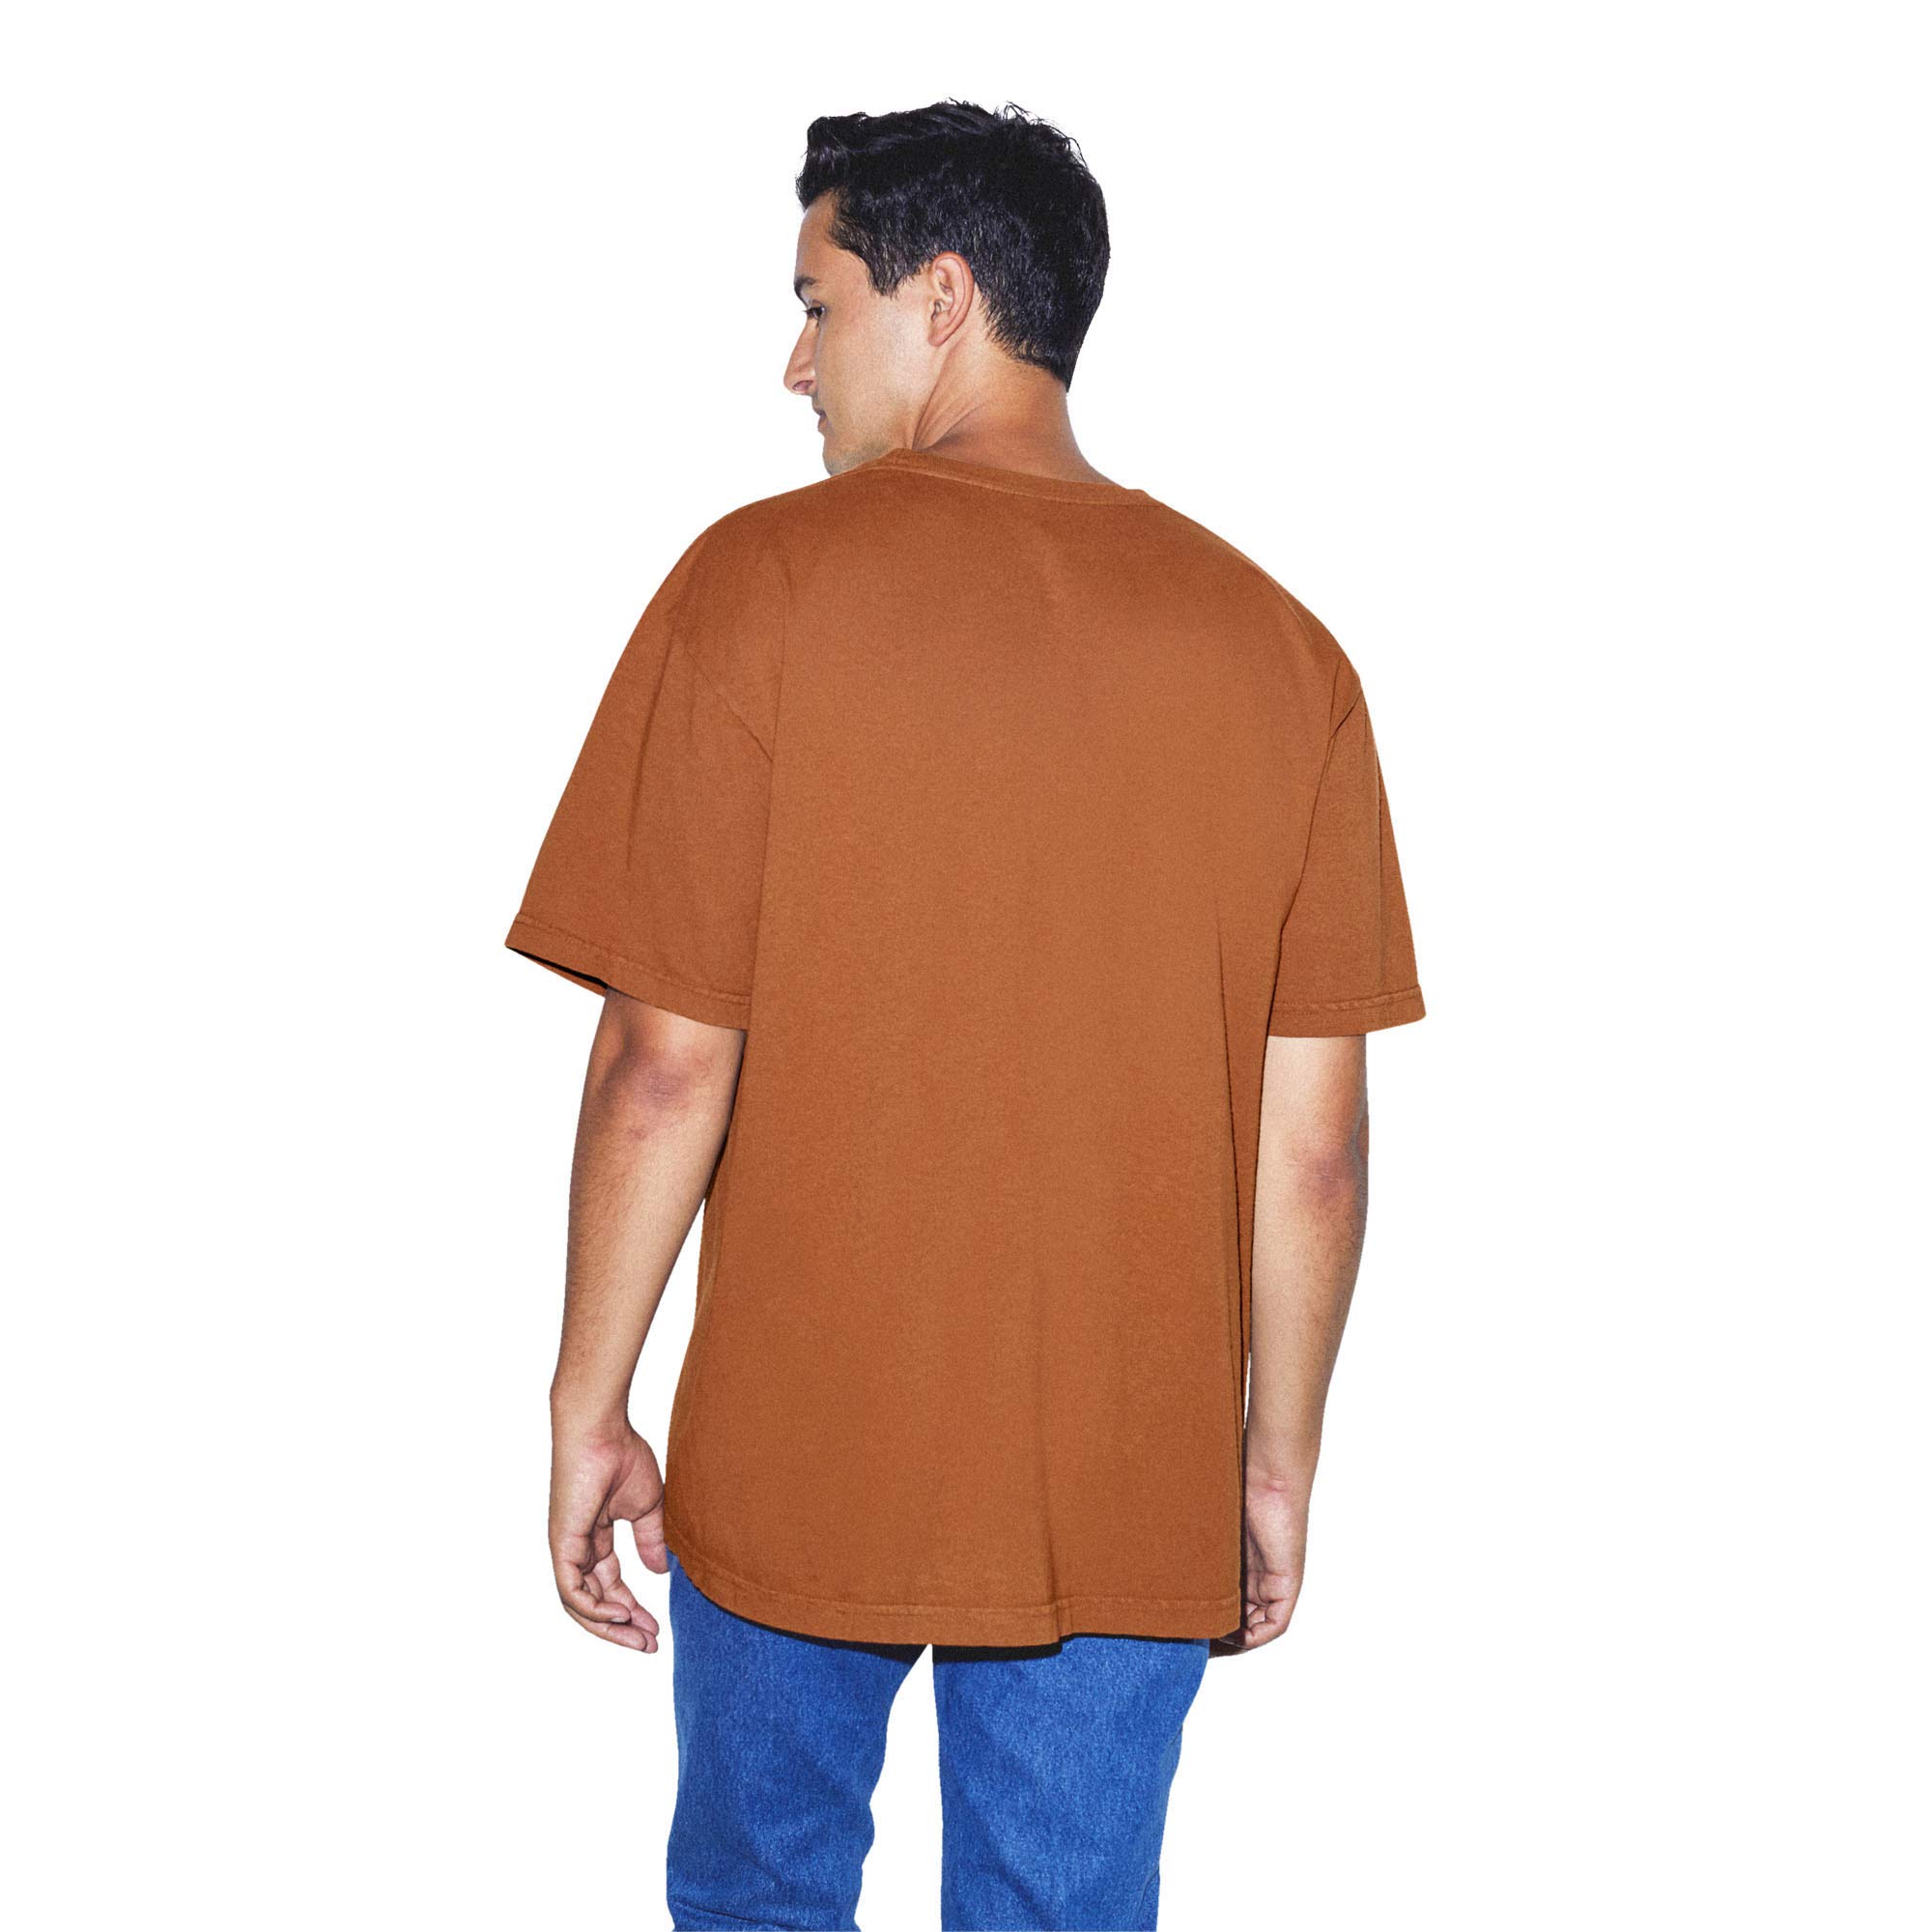 American Apparel Men's Heavy Jersey Box Short Sleeve T-Shirt